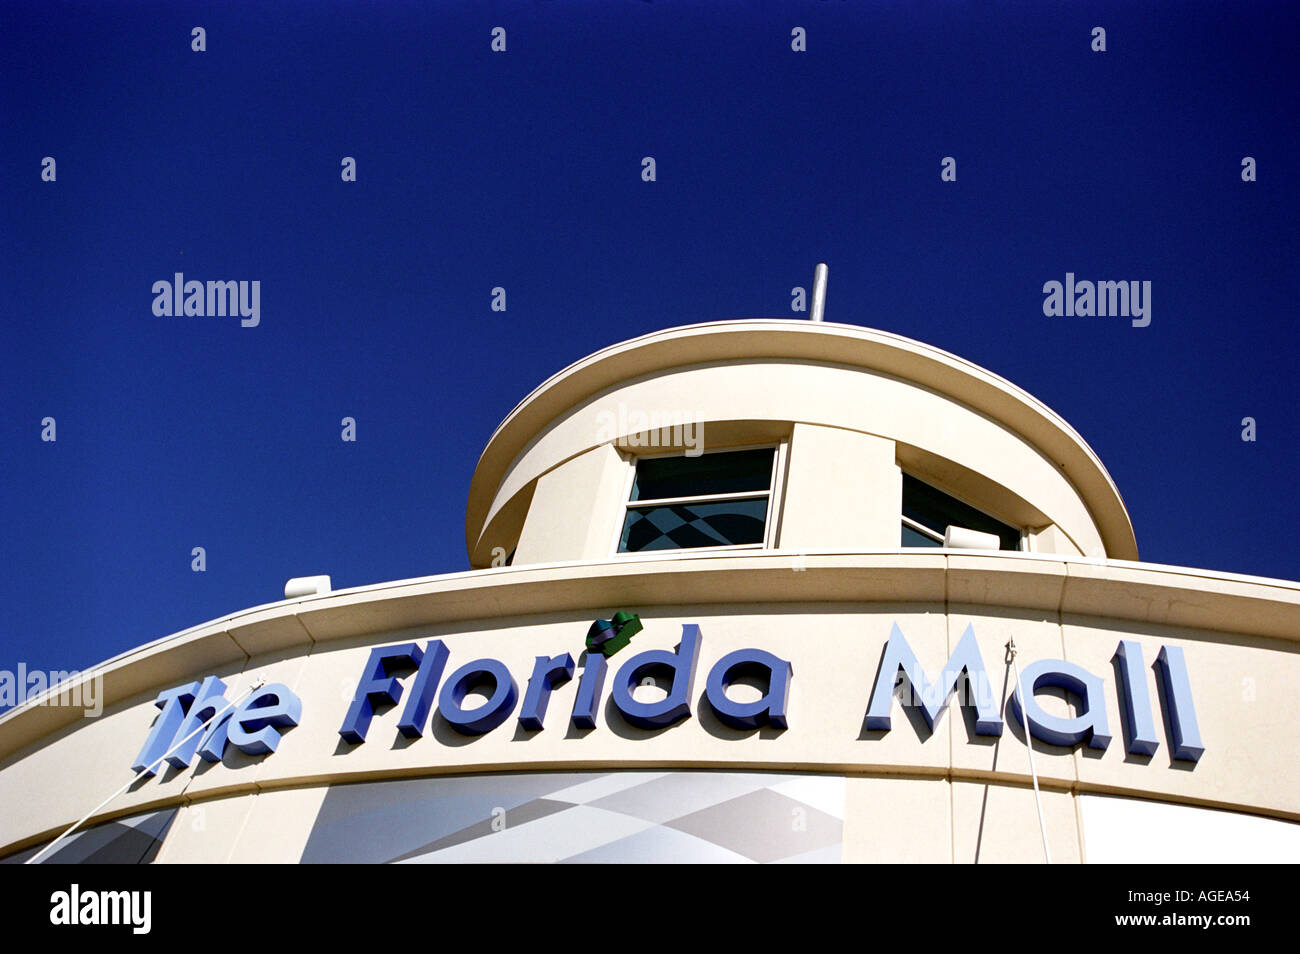 Le Florida Mall en Floride USA Banque D'Images